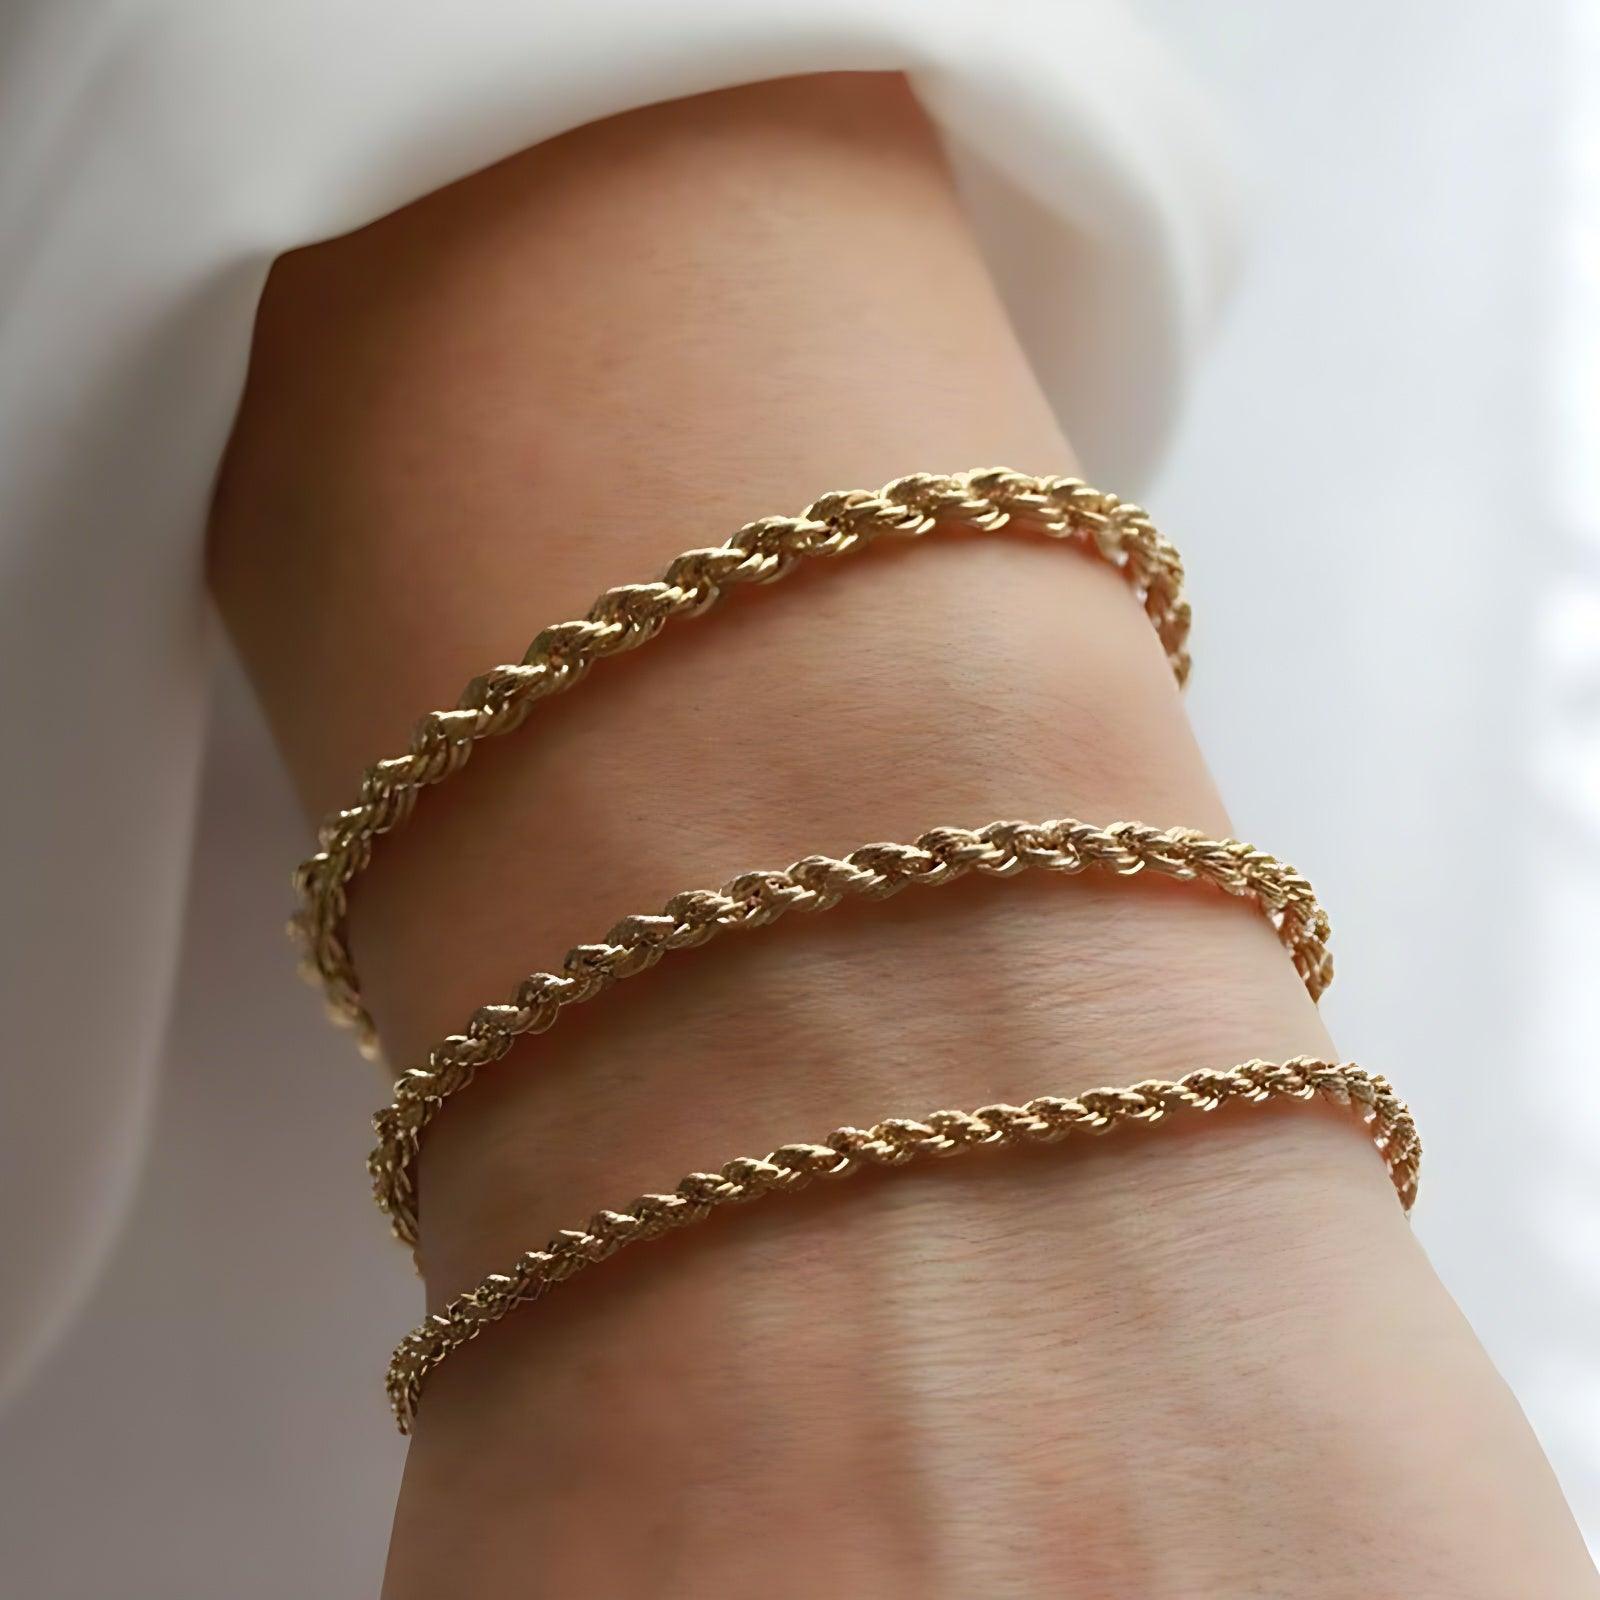 Bracelets Charm Jewelry Accessories - Touchy Style .